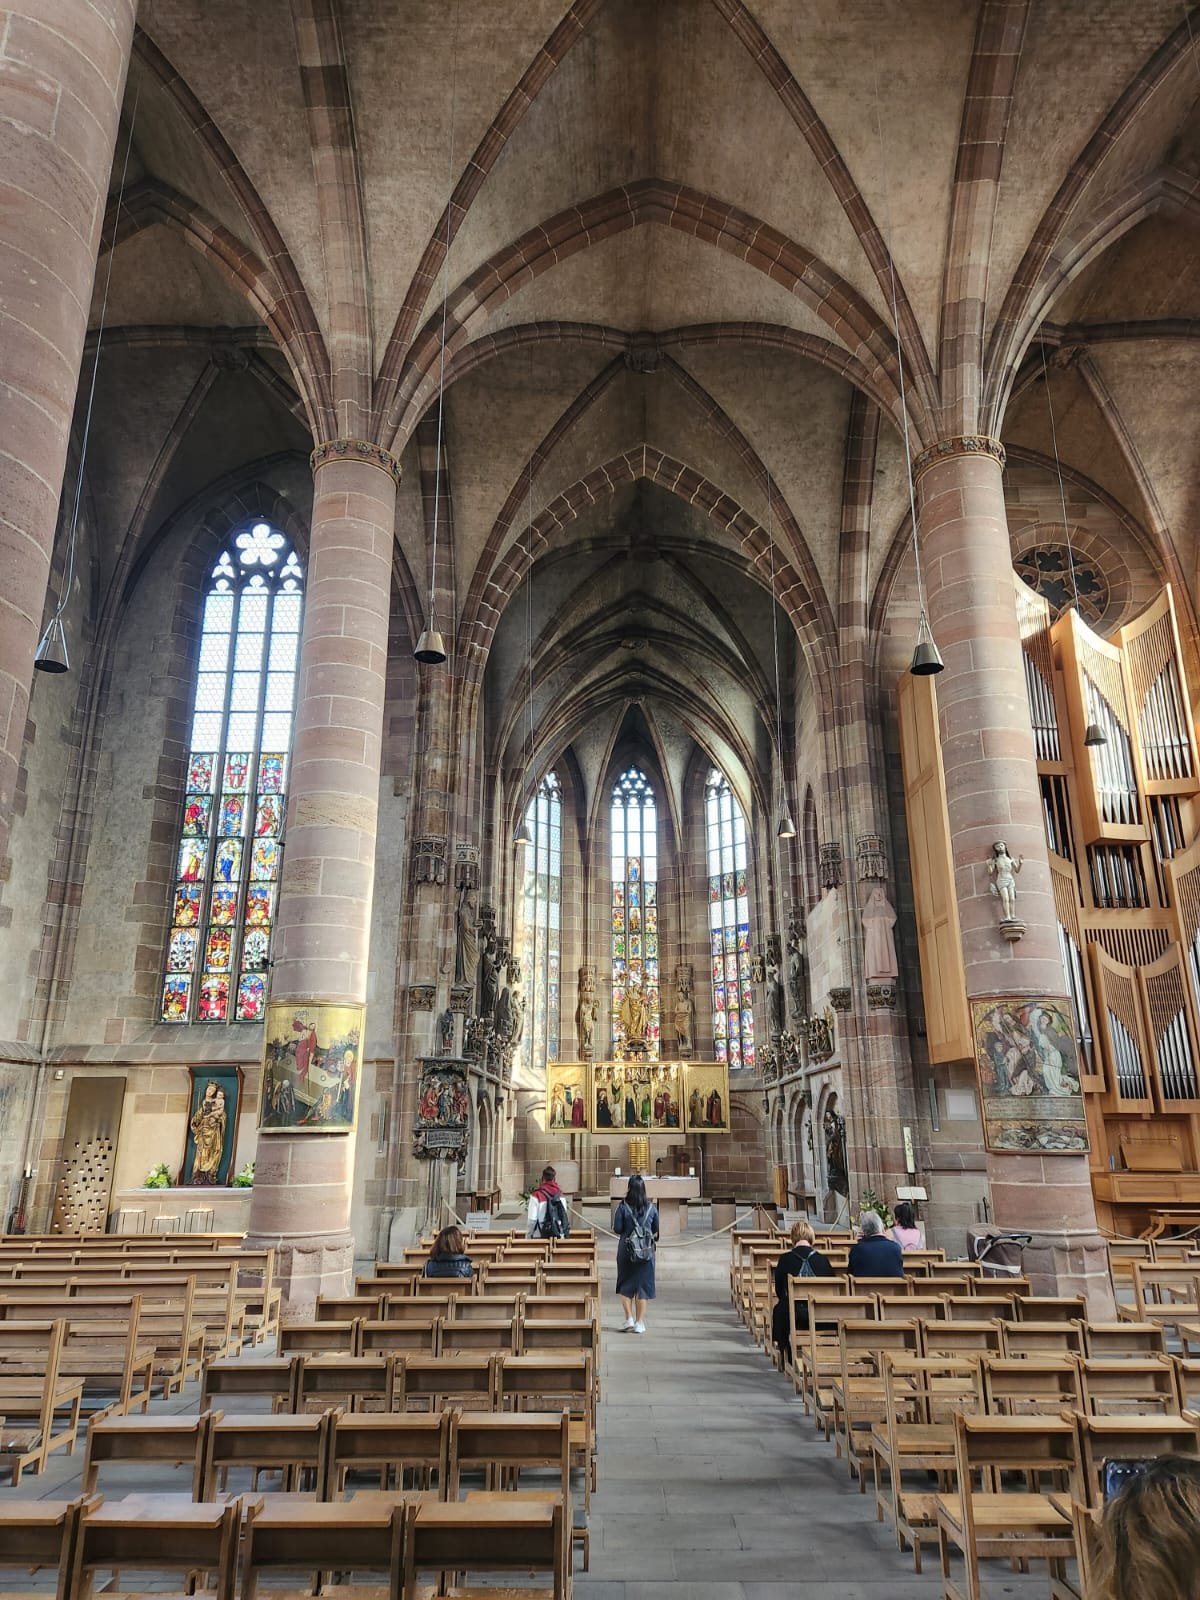   St. Sebald’s interior. Rebuilt after World War 2  